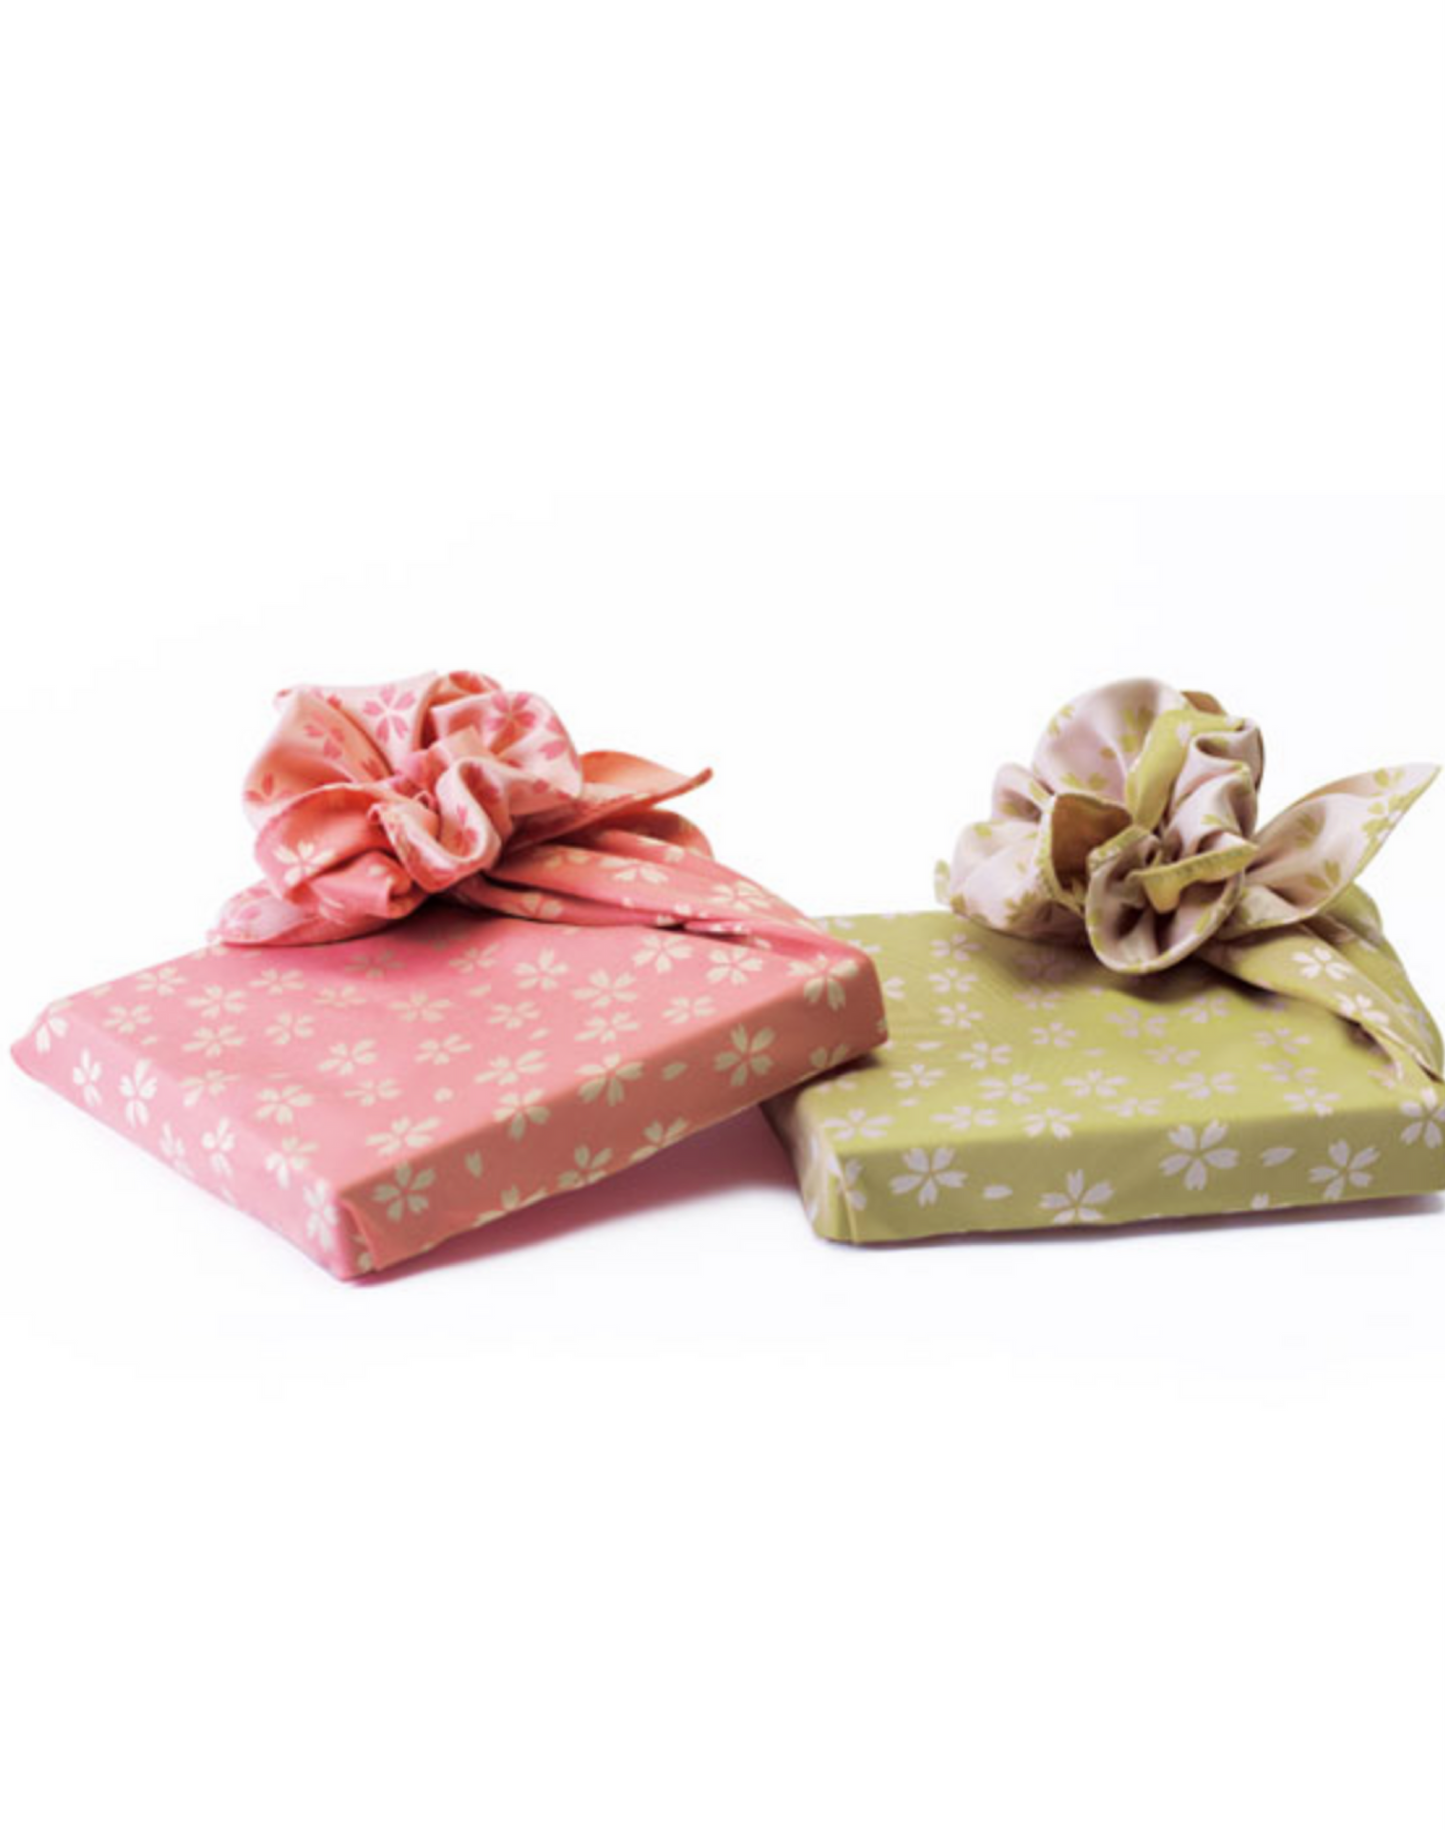 kyoto furoshiki wrapping cloth gift wrapping